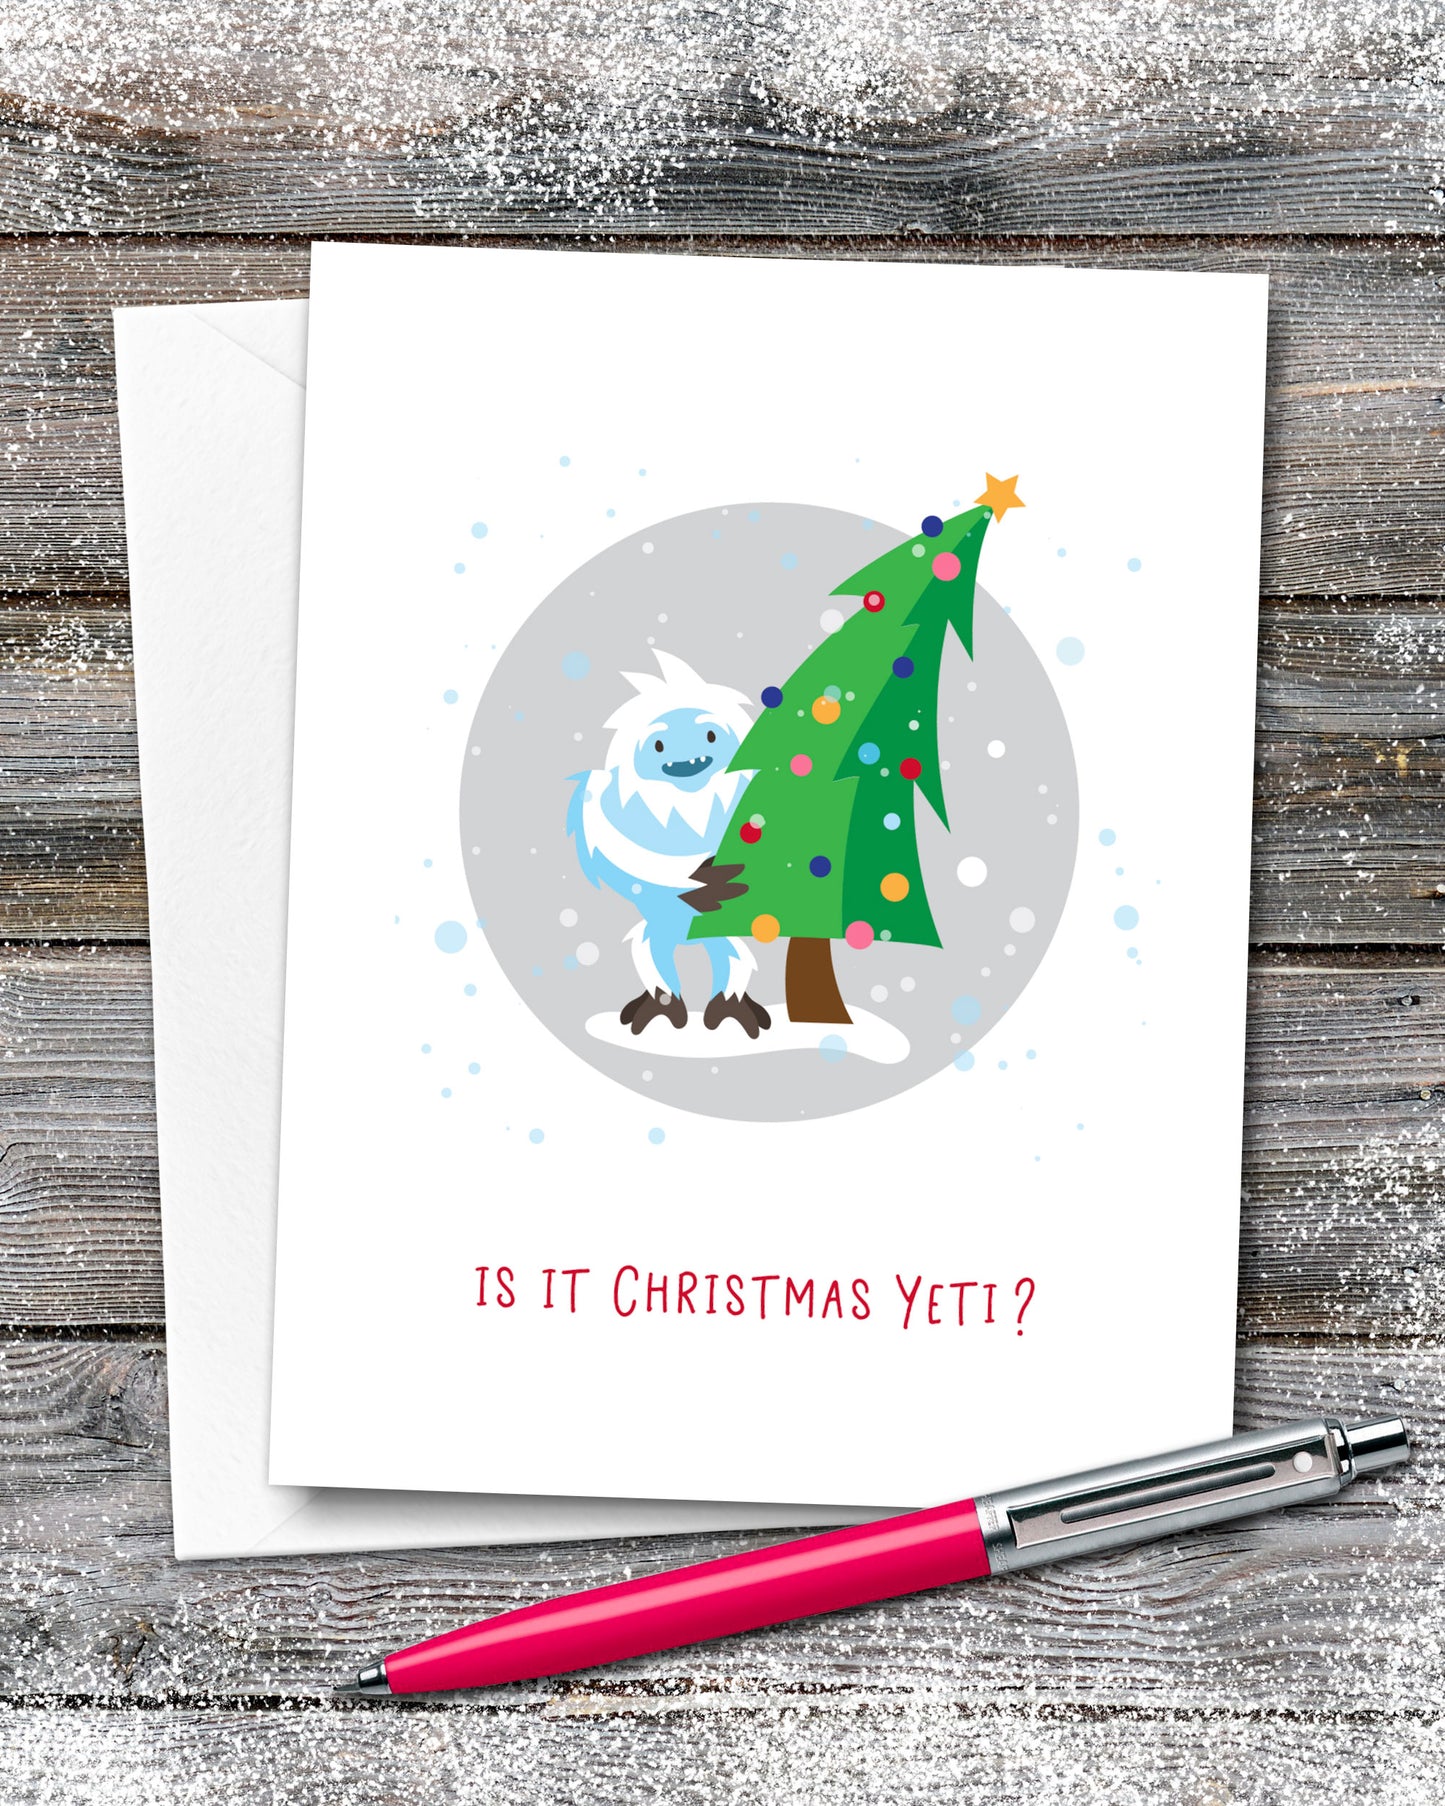 Yeti Christmas Card, Bigfoot, Abominable Snowman Card by Smirkantile